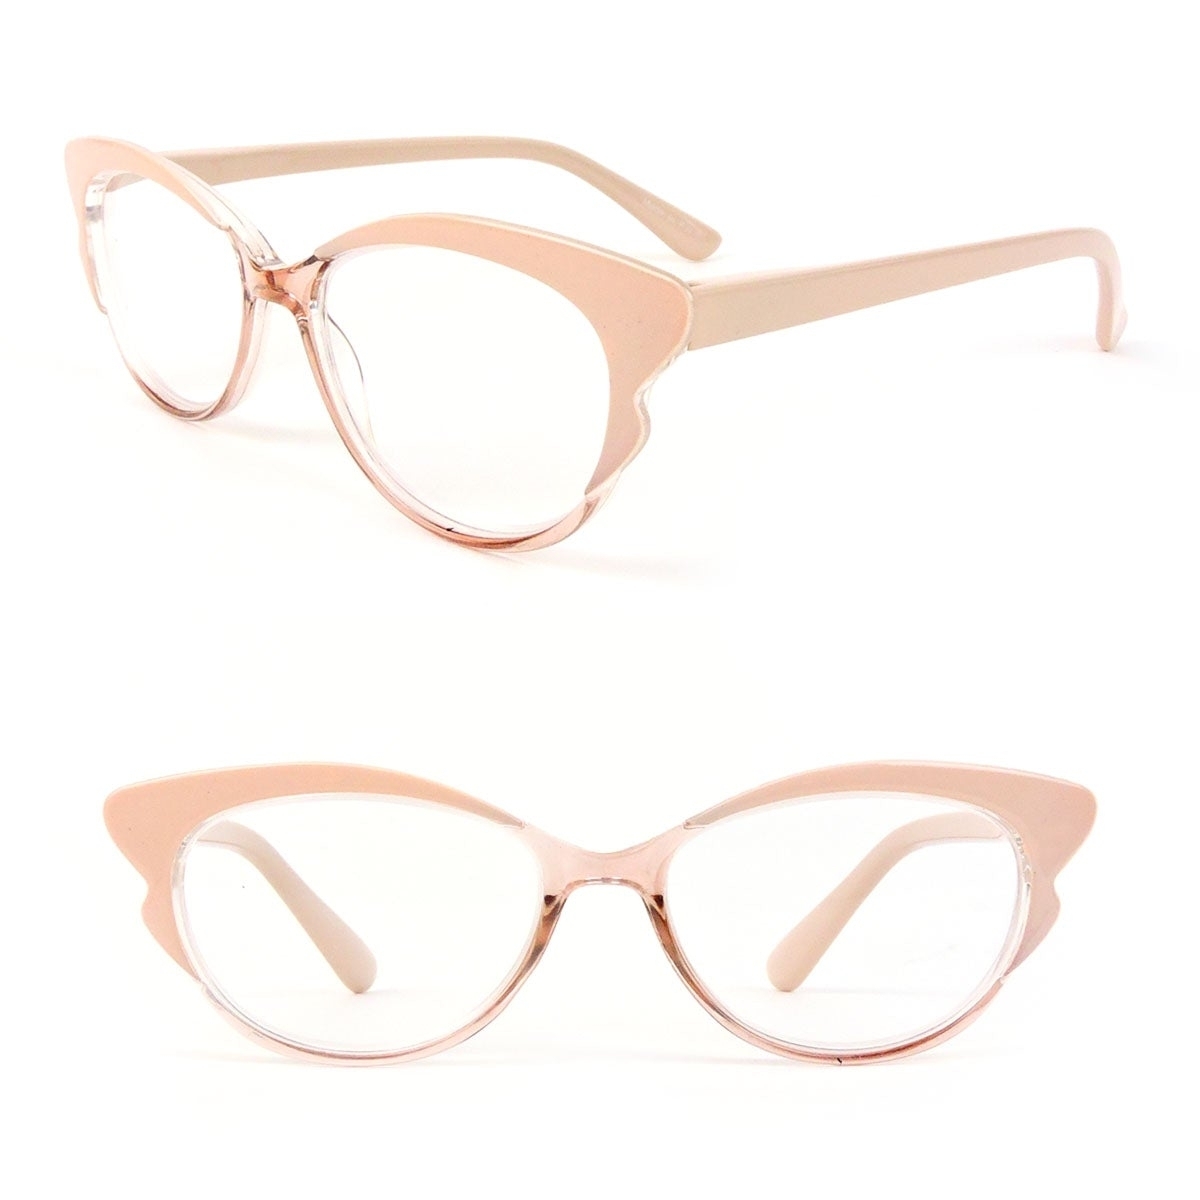 Cat Eye Frame Spring Hinges Fashion Women's Reading Glasses - Beige, +1.50